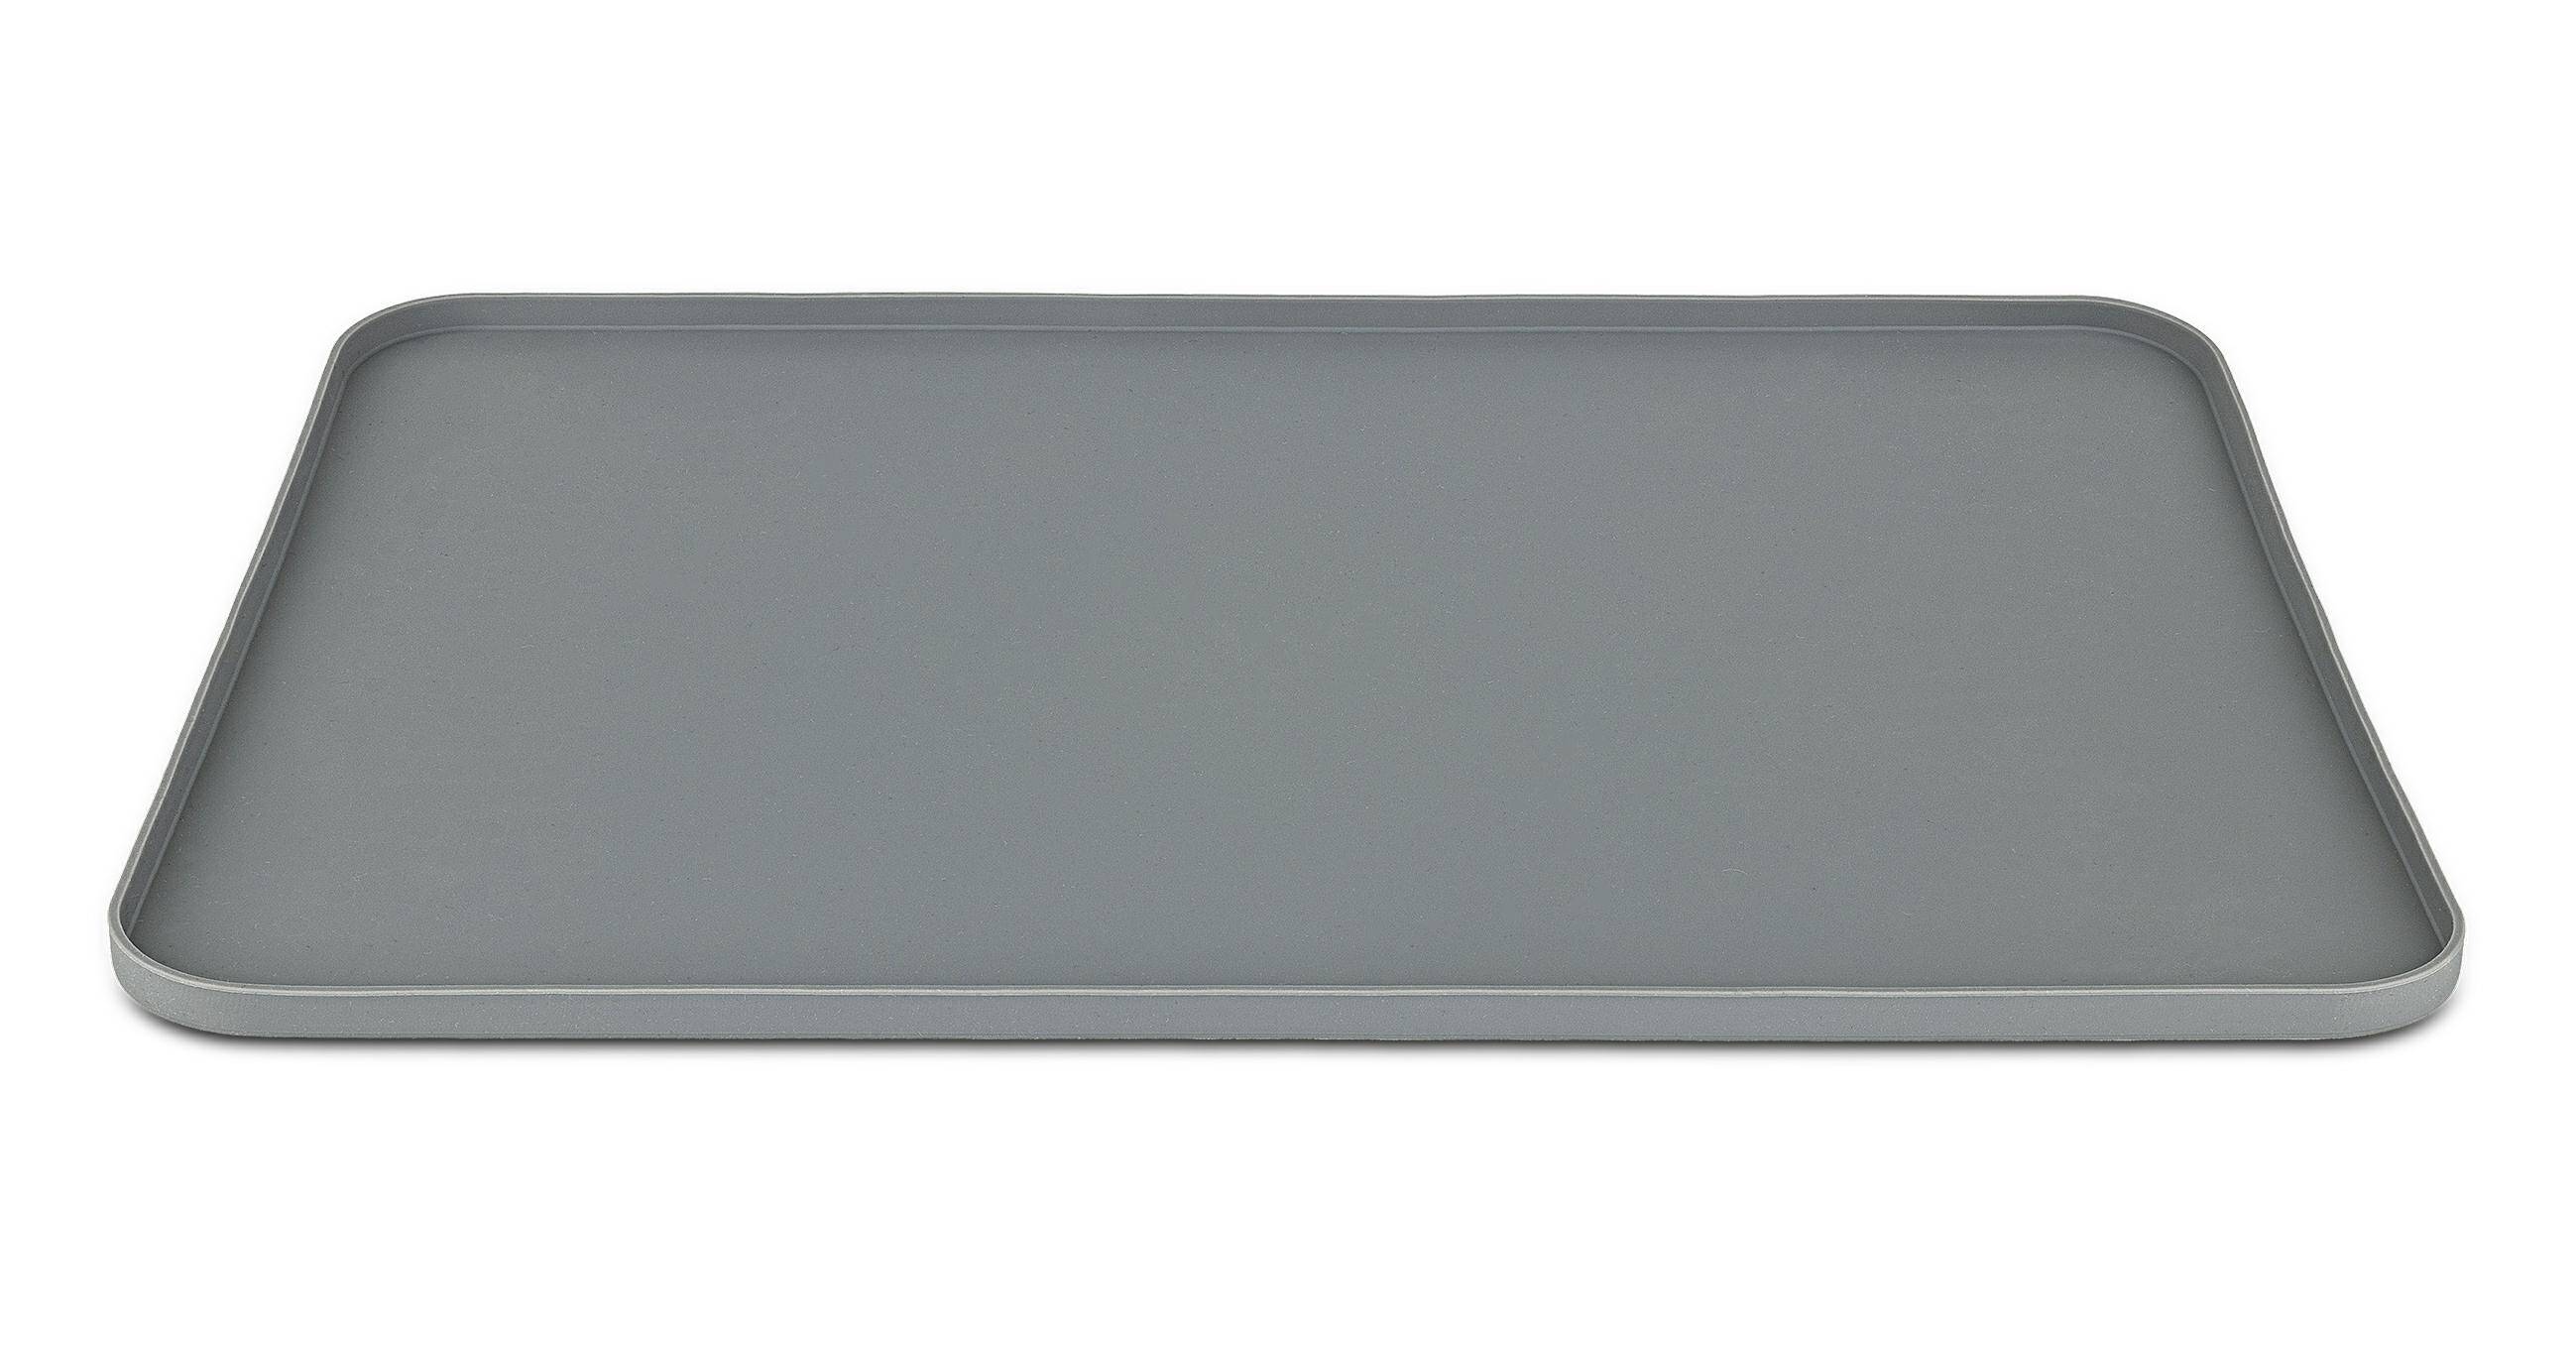 Silicone mat gray 42x30cm M (Photo 3)